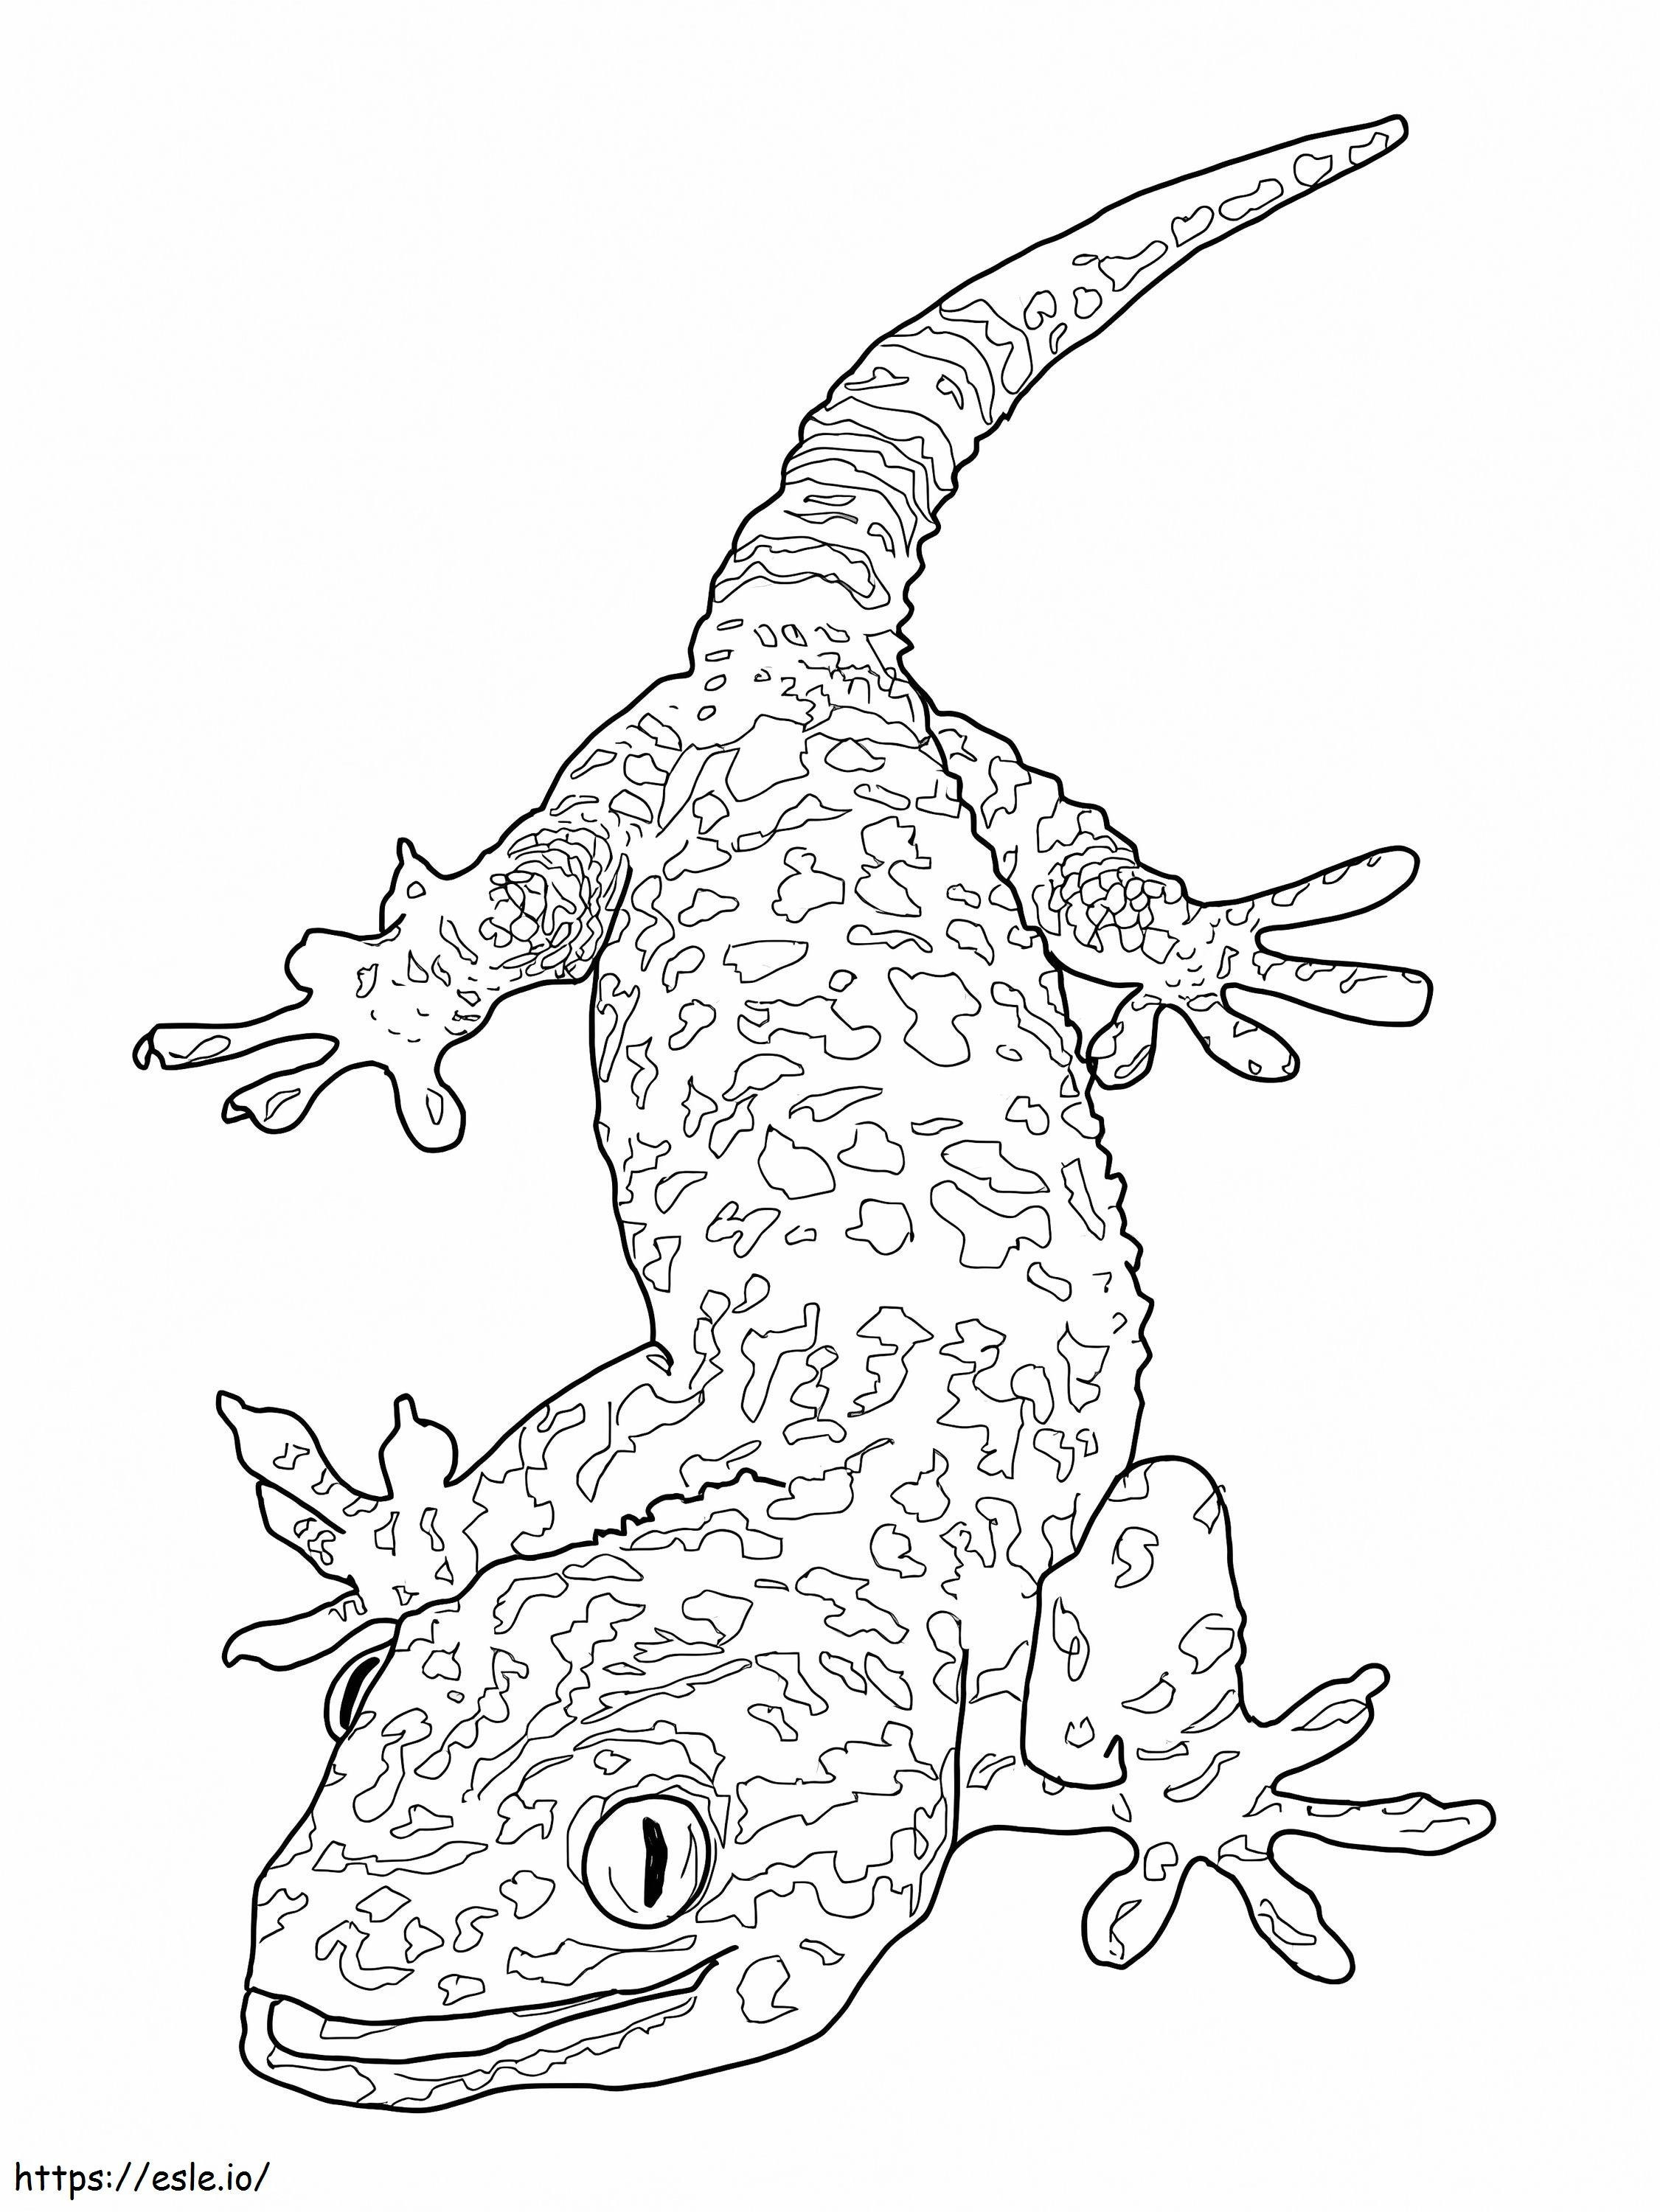 Gecko Tokay coloring page